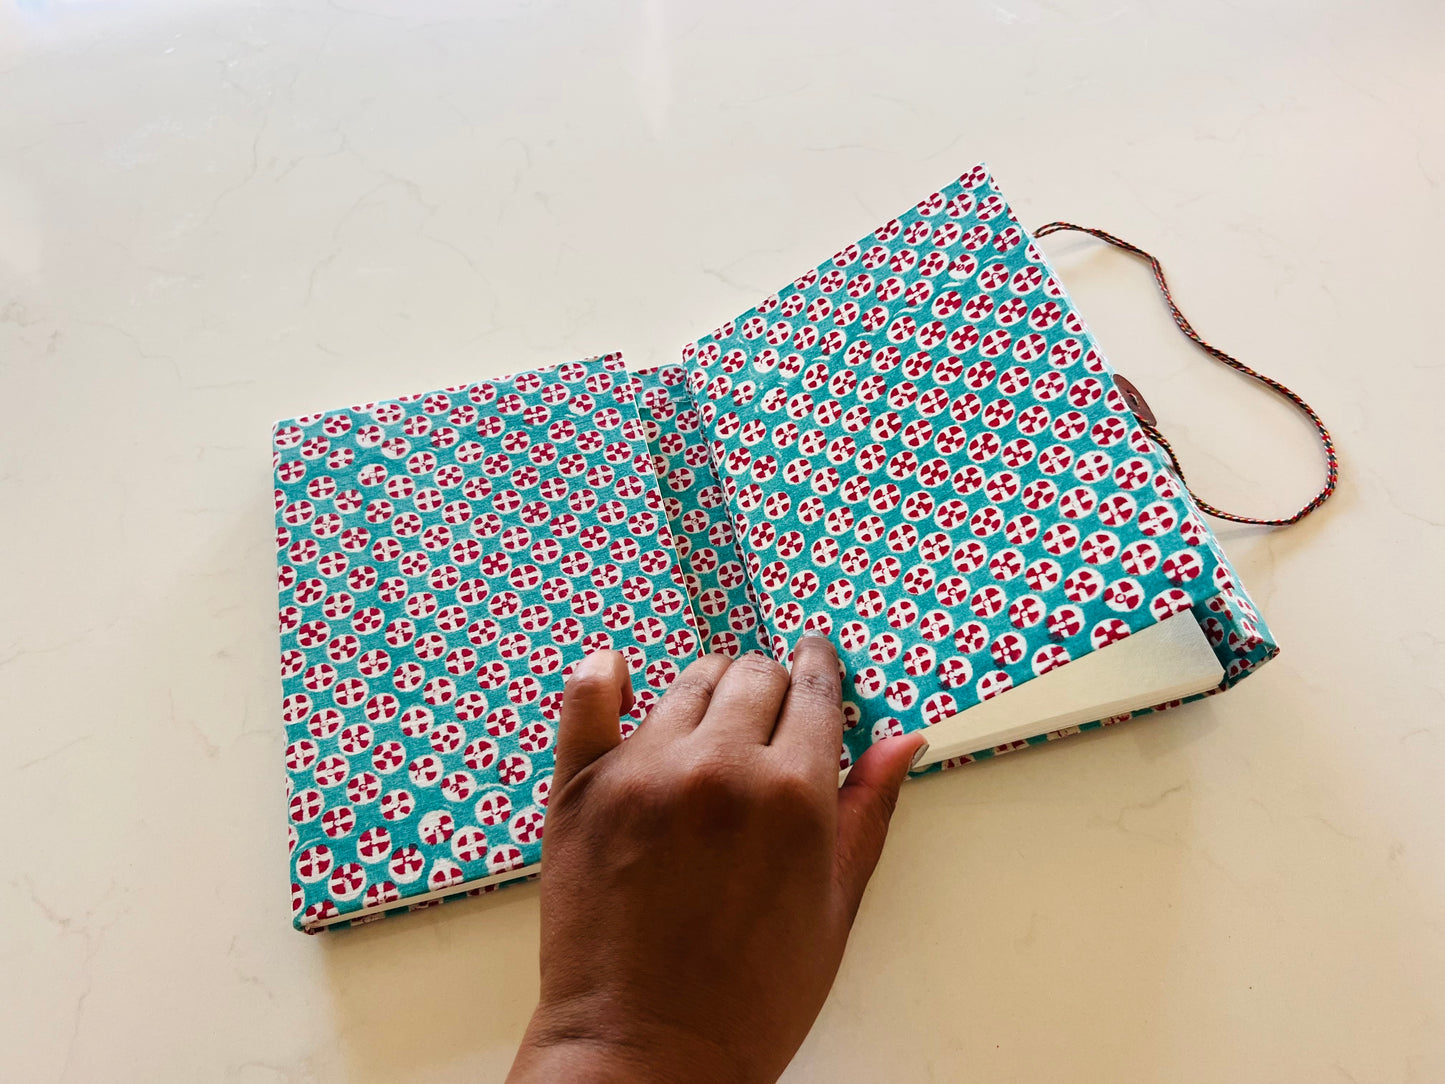 The Rama Handmade Upcycled Journal